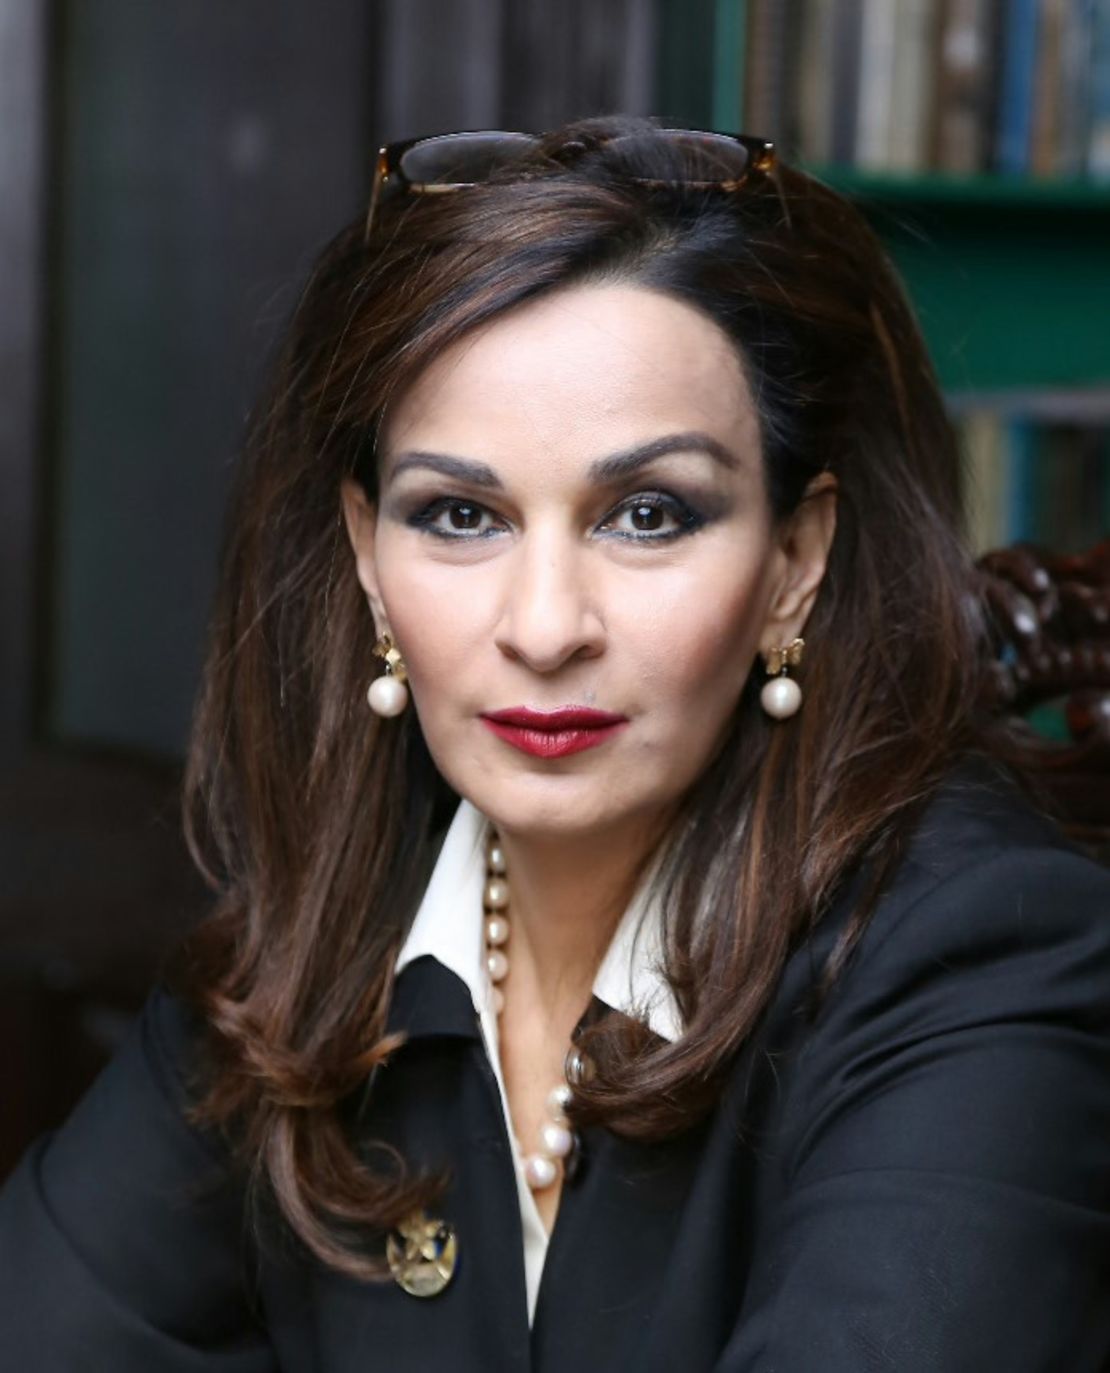 Sherry Rehman is an opposition Senator in Pakistan's parliament